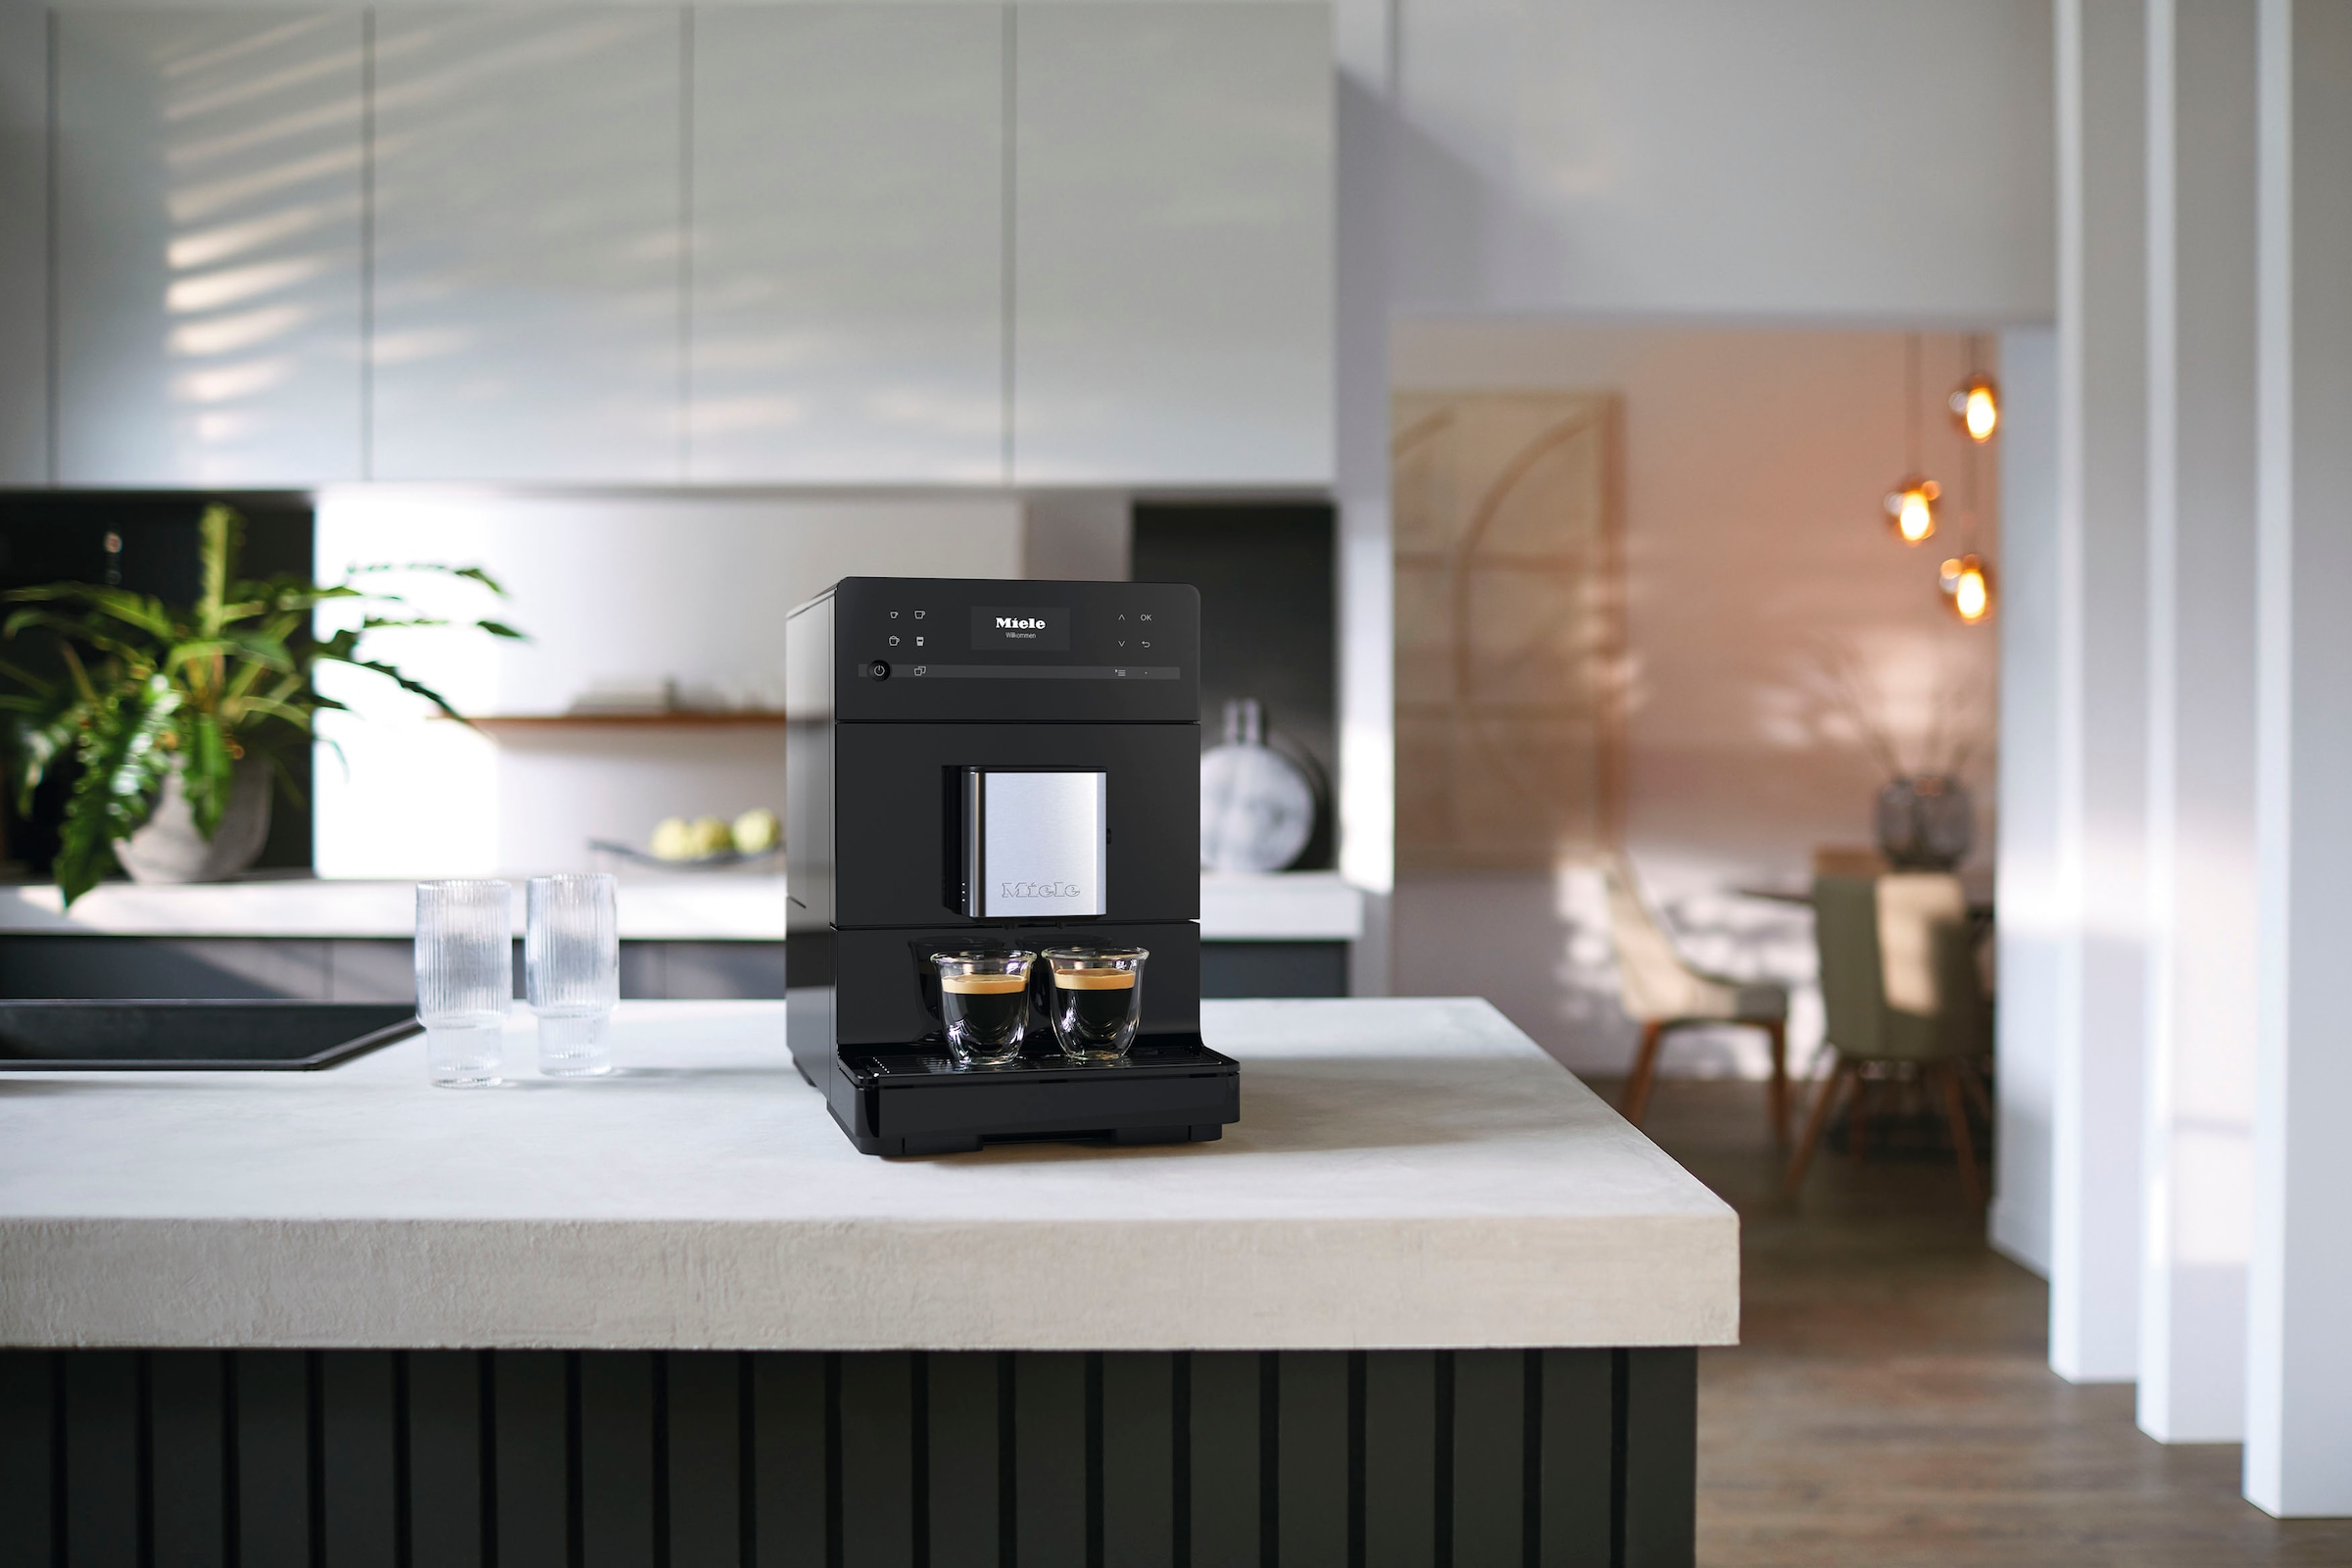 Miele Kaffeevollautomat »Miele CM 5310 Silence«, Kaffeekannenfunktion